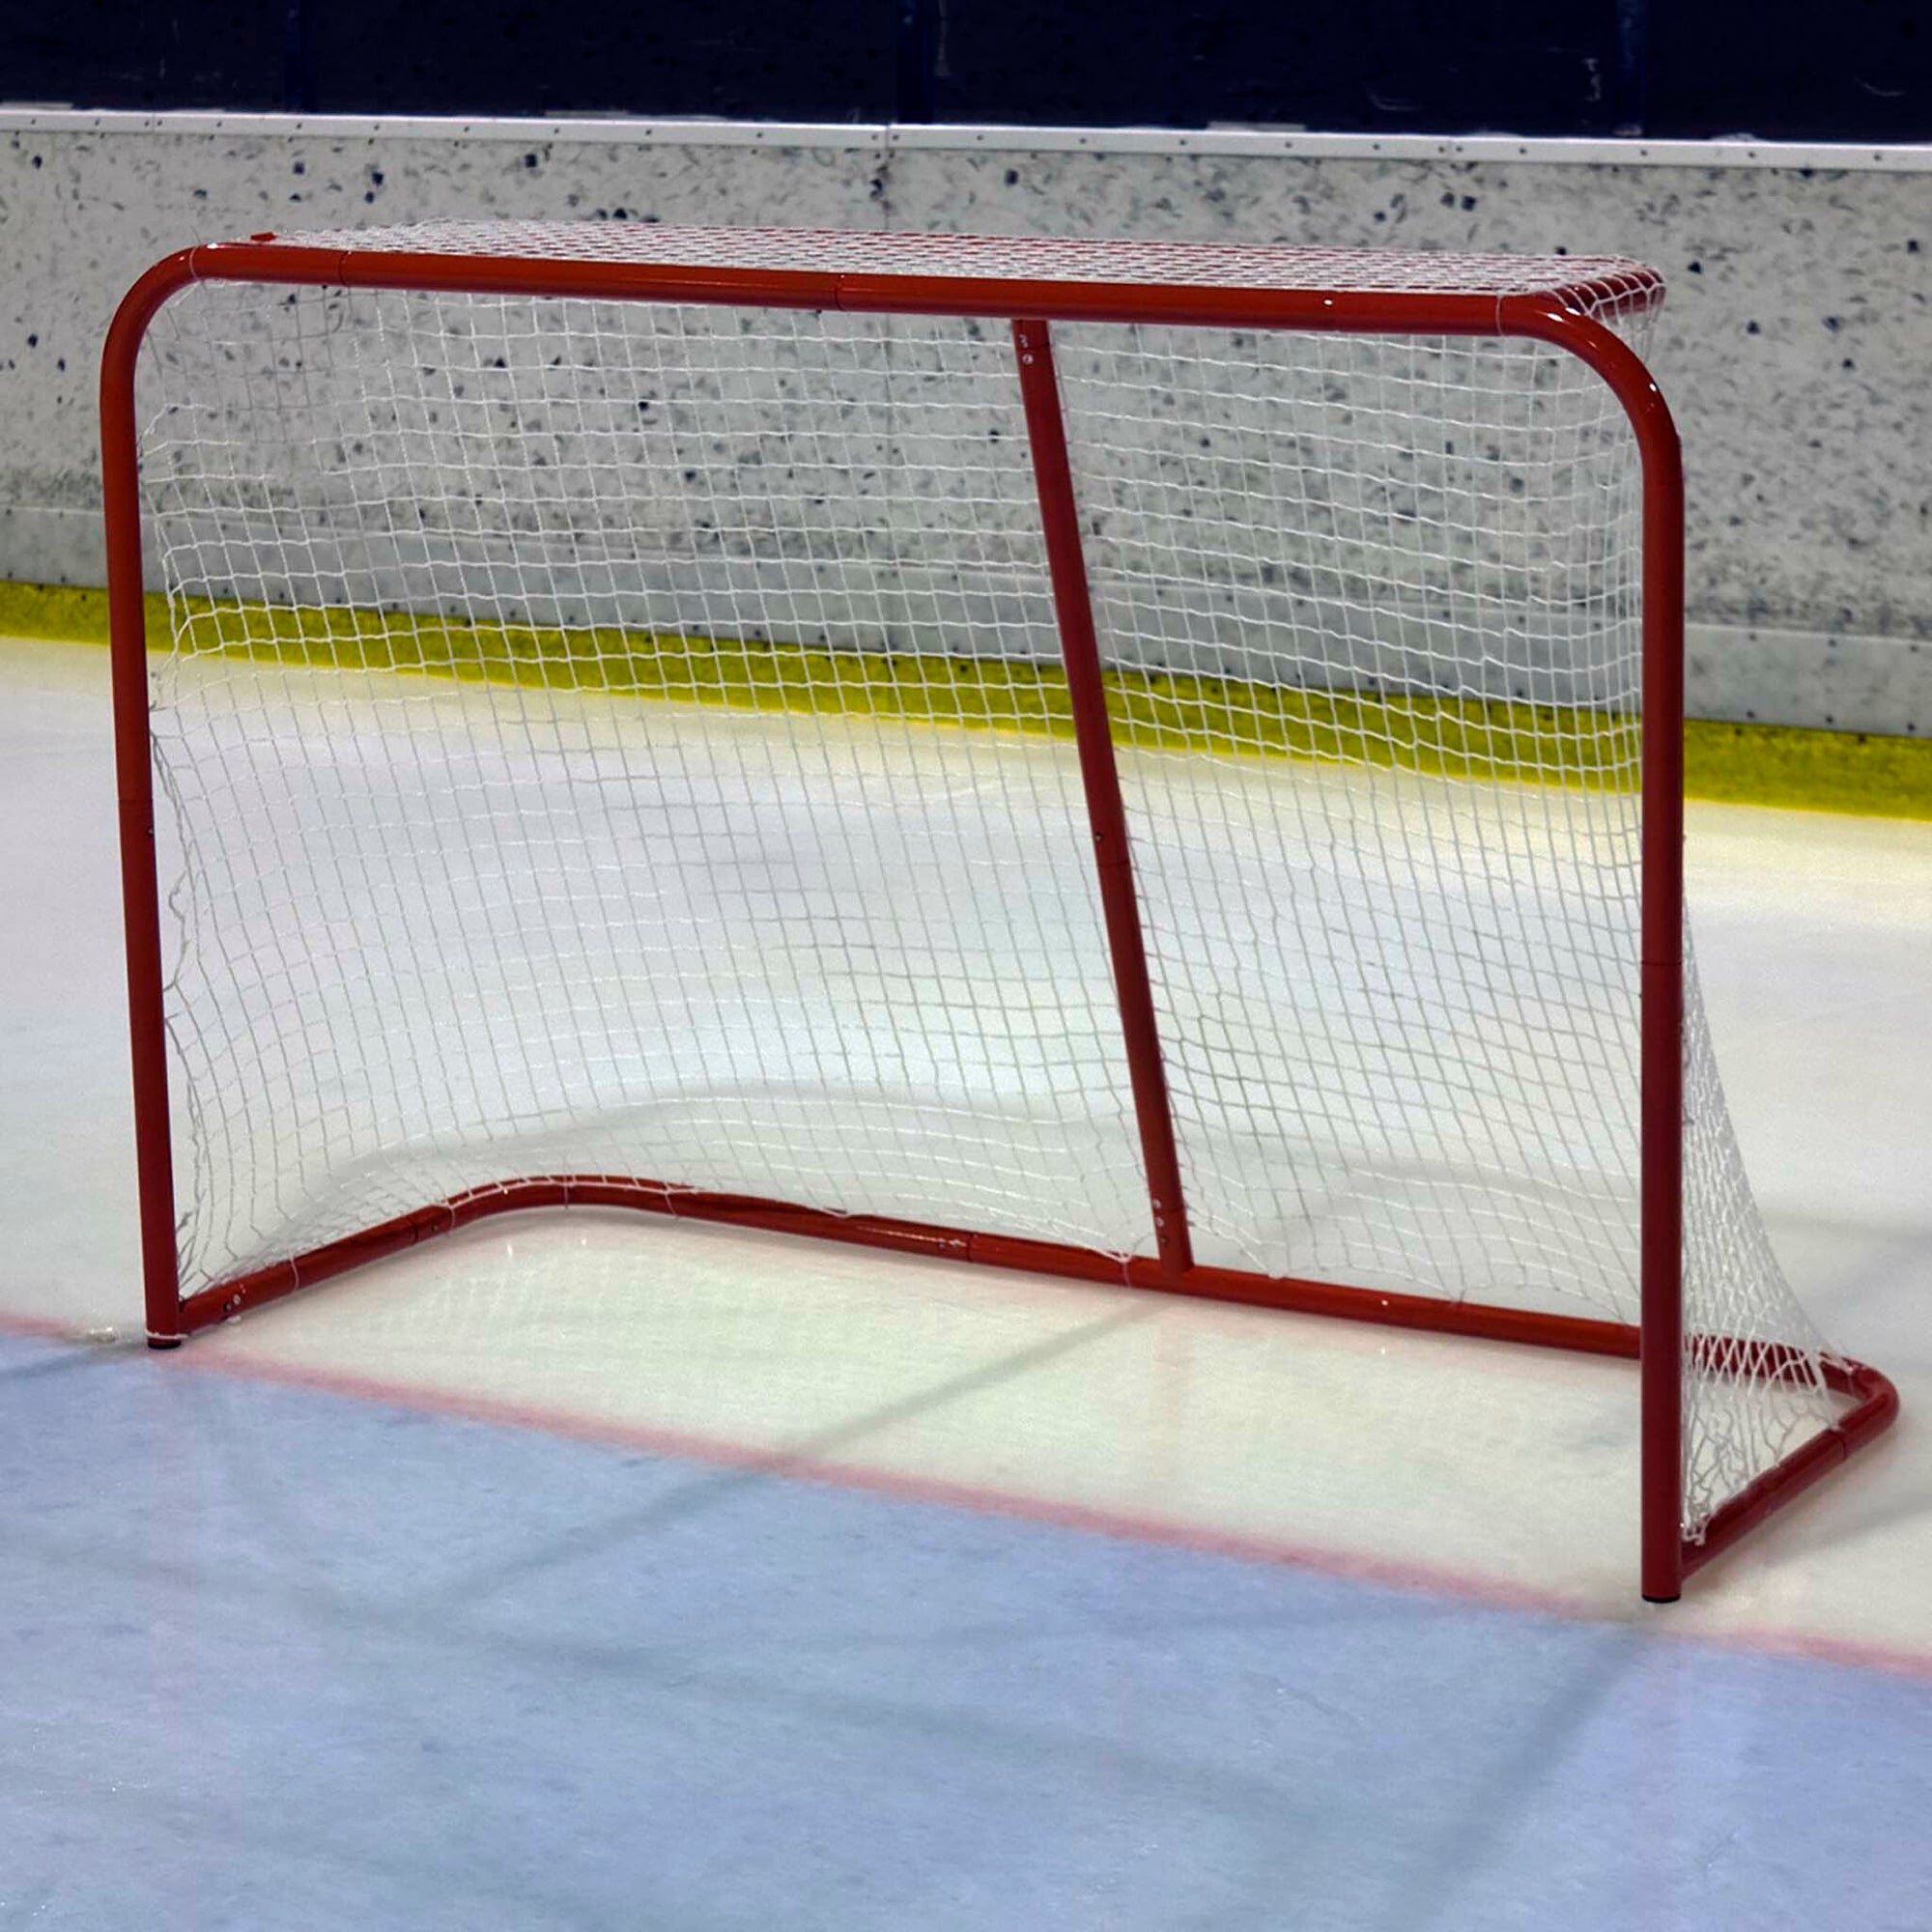 Ishockeymål, officiell storlek